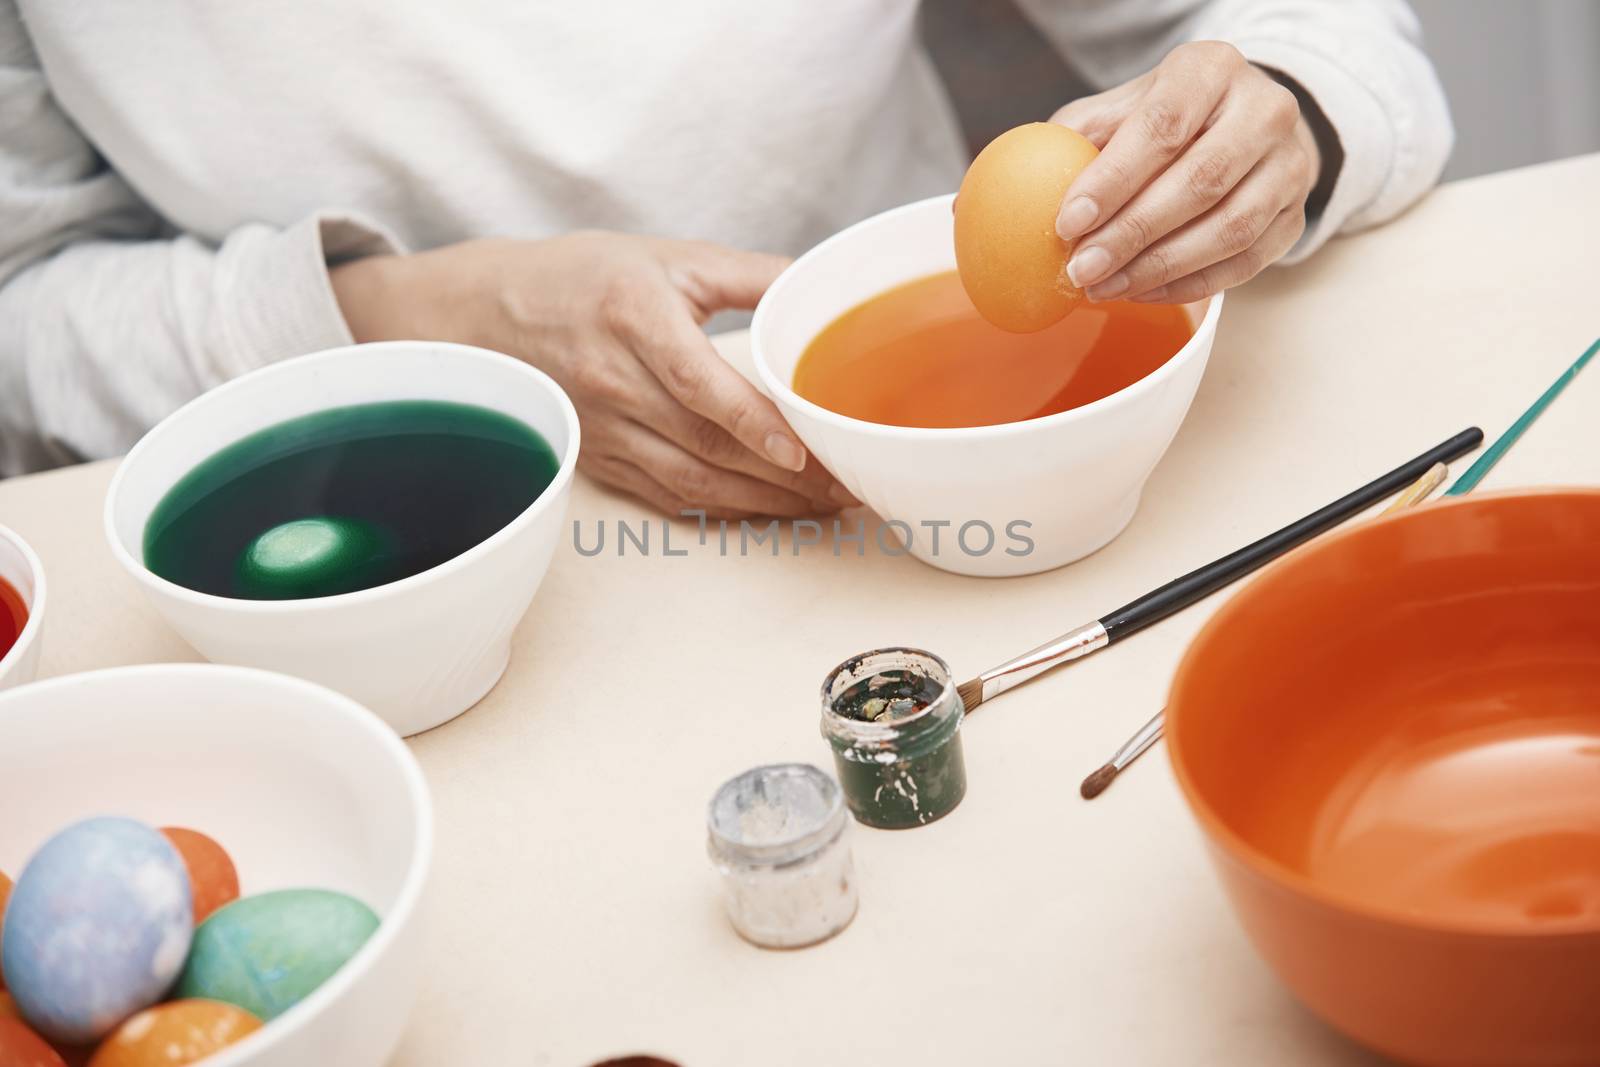 Woman preparing Easter eggs by Novic